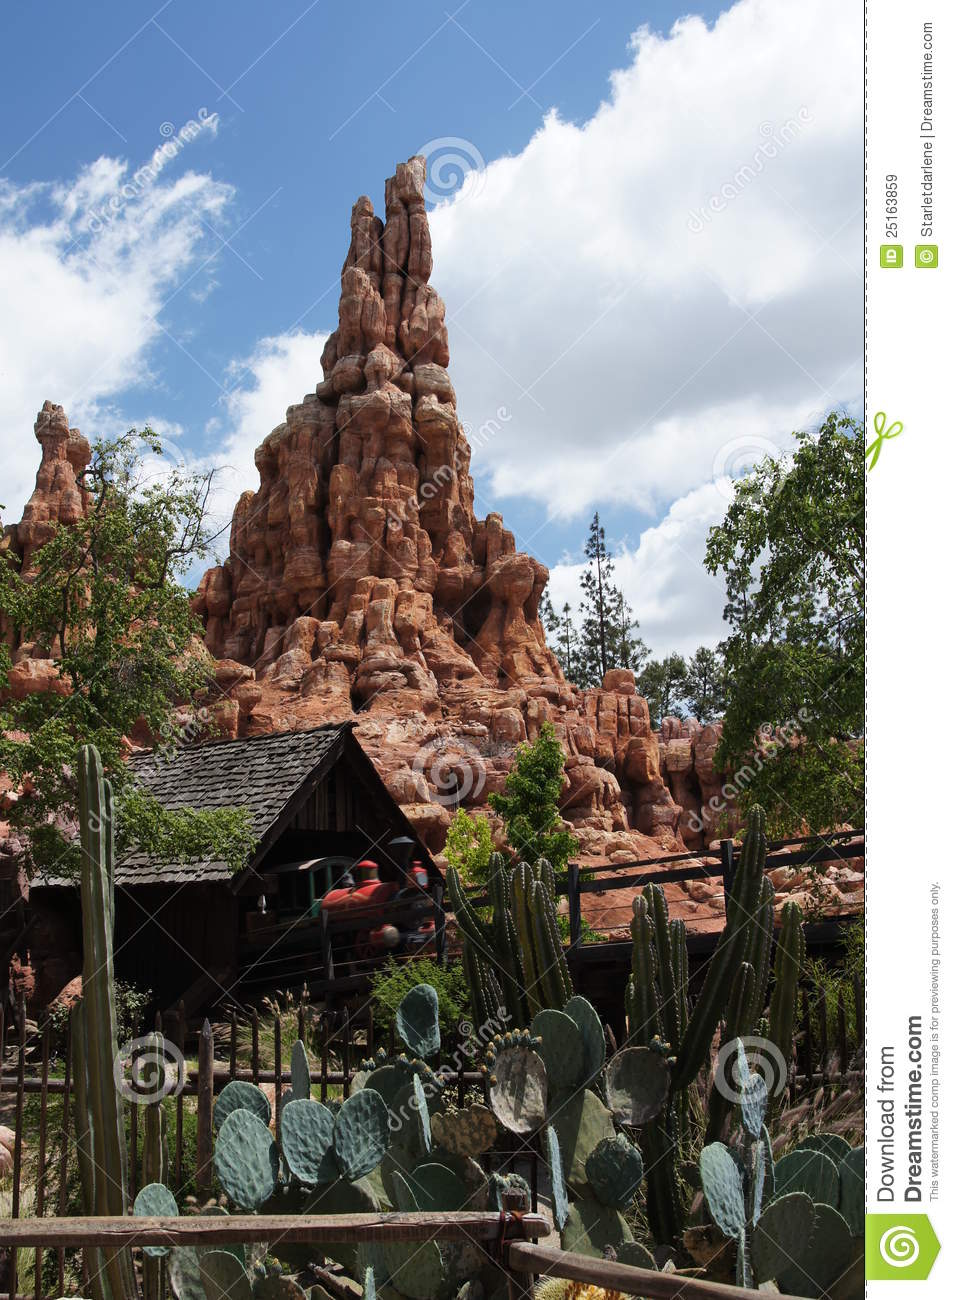 Thunder Mountain Ride At Disneyland Editorial Stock Image   Image